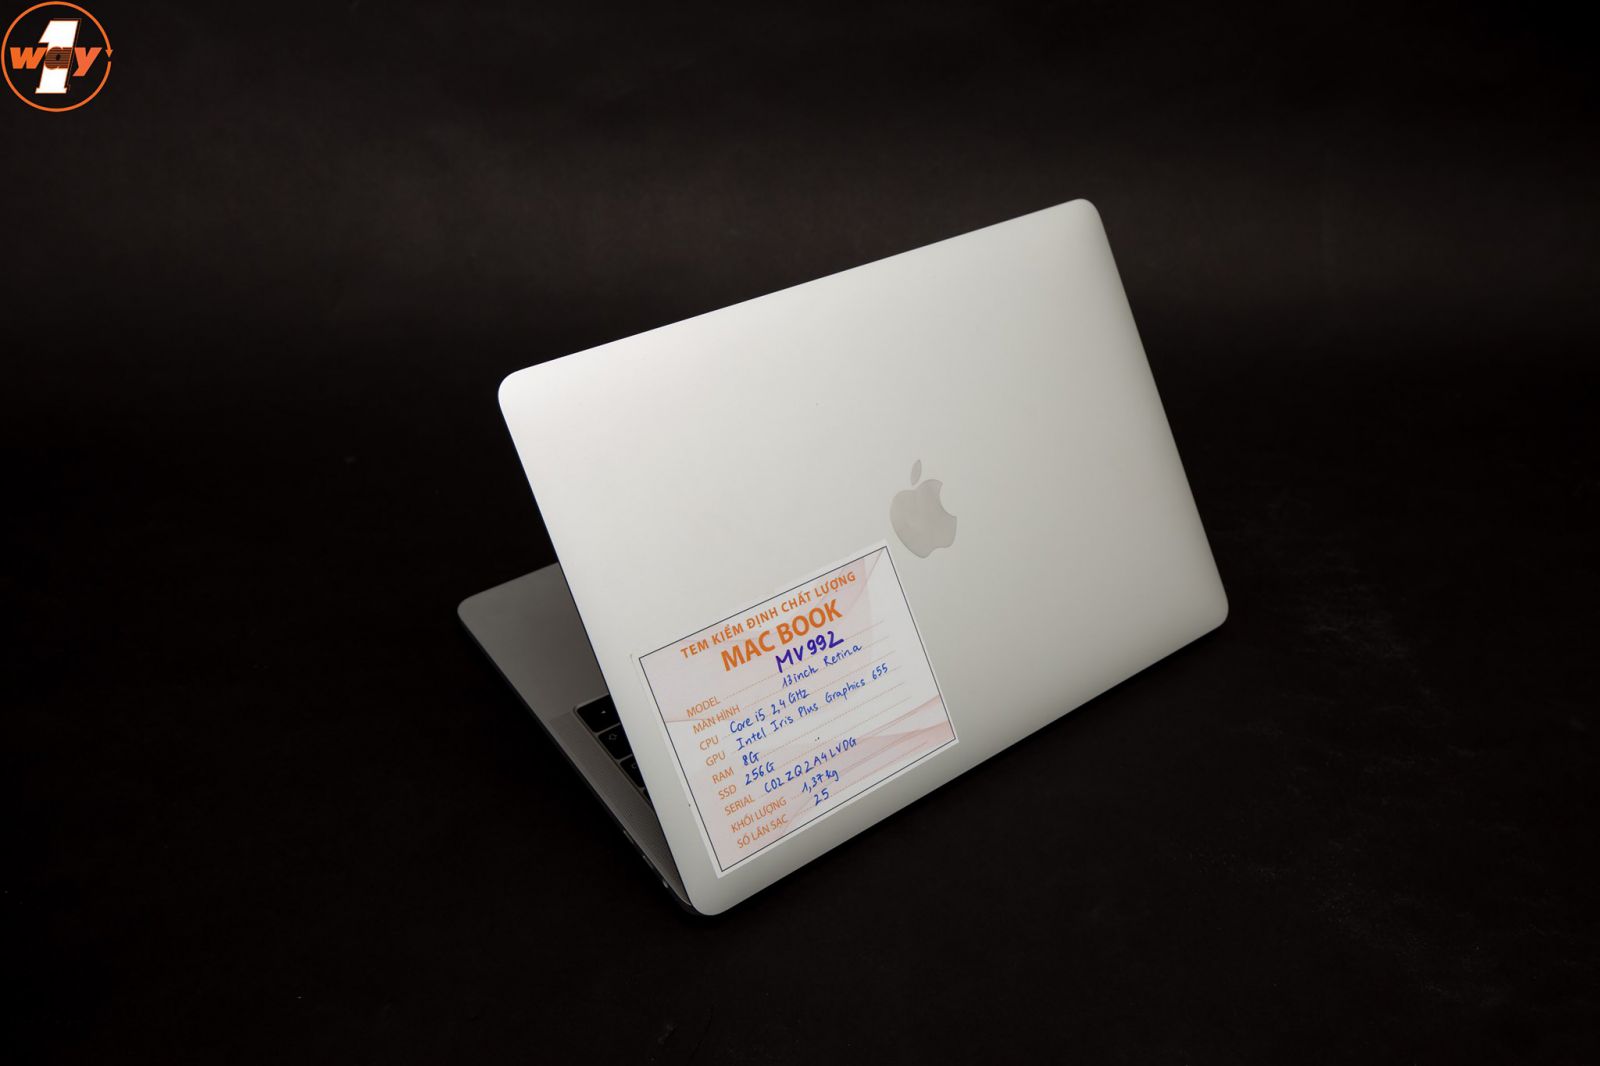 MacBook Pro 2019 - 13 inch - 256GB - MV992 cũ